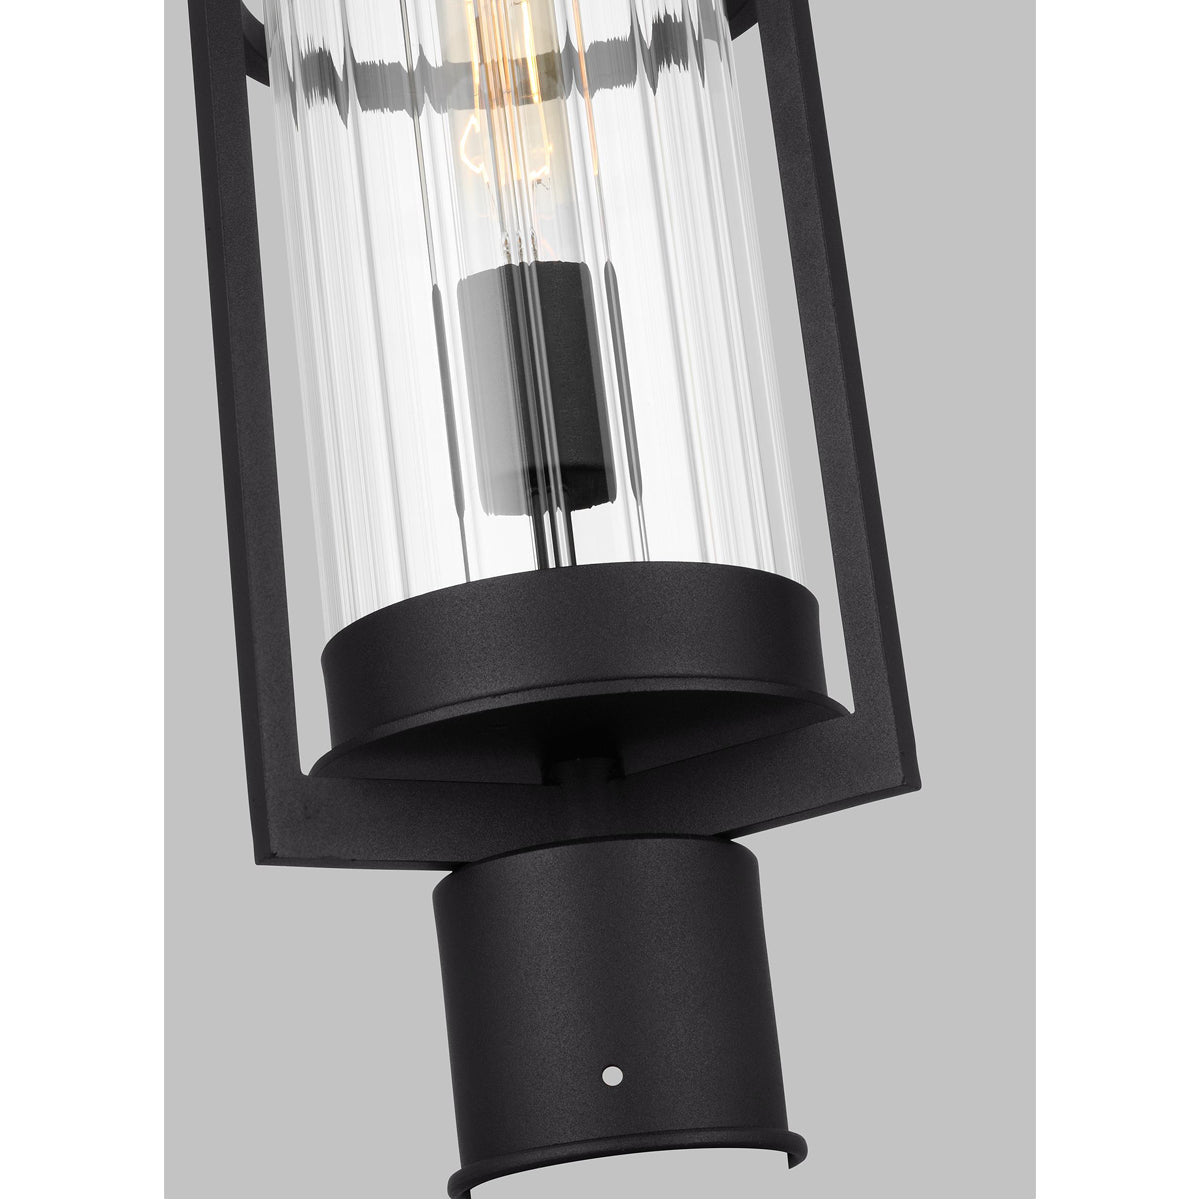 Sea Gull Lighting Alcona 1-Light Outdoor Post Lantern